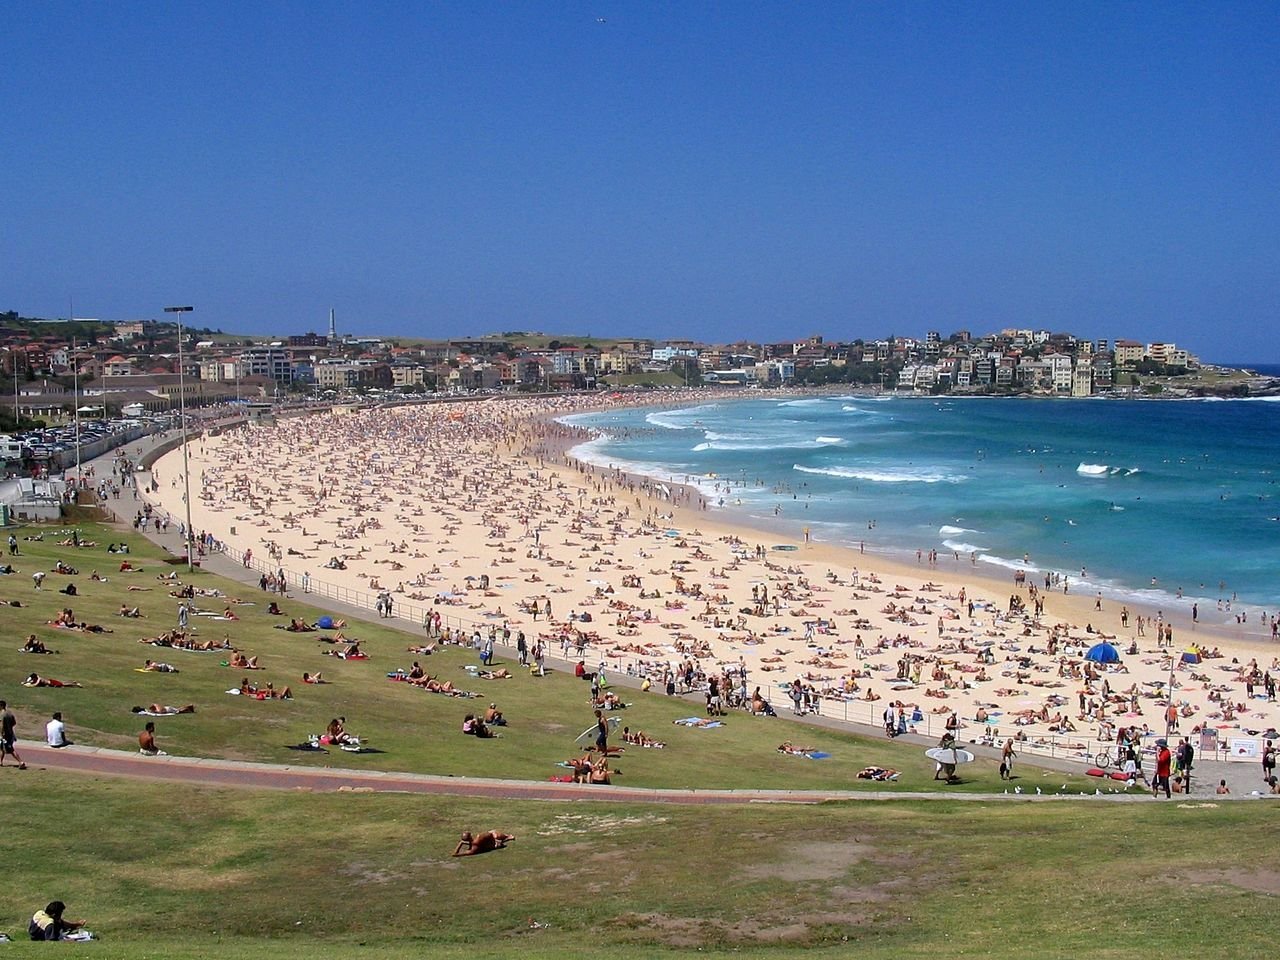 Bondi Beach, Best Beaches in Australia - GoVisity.com